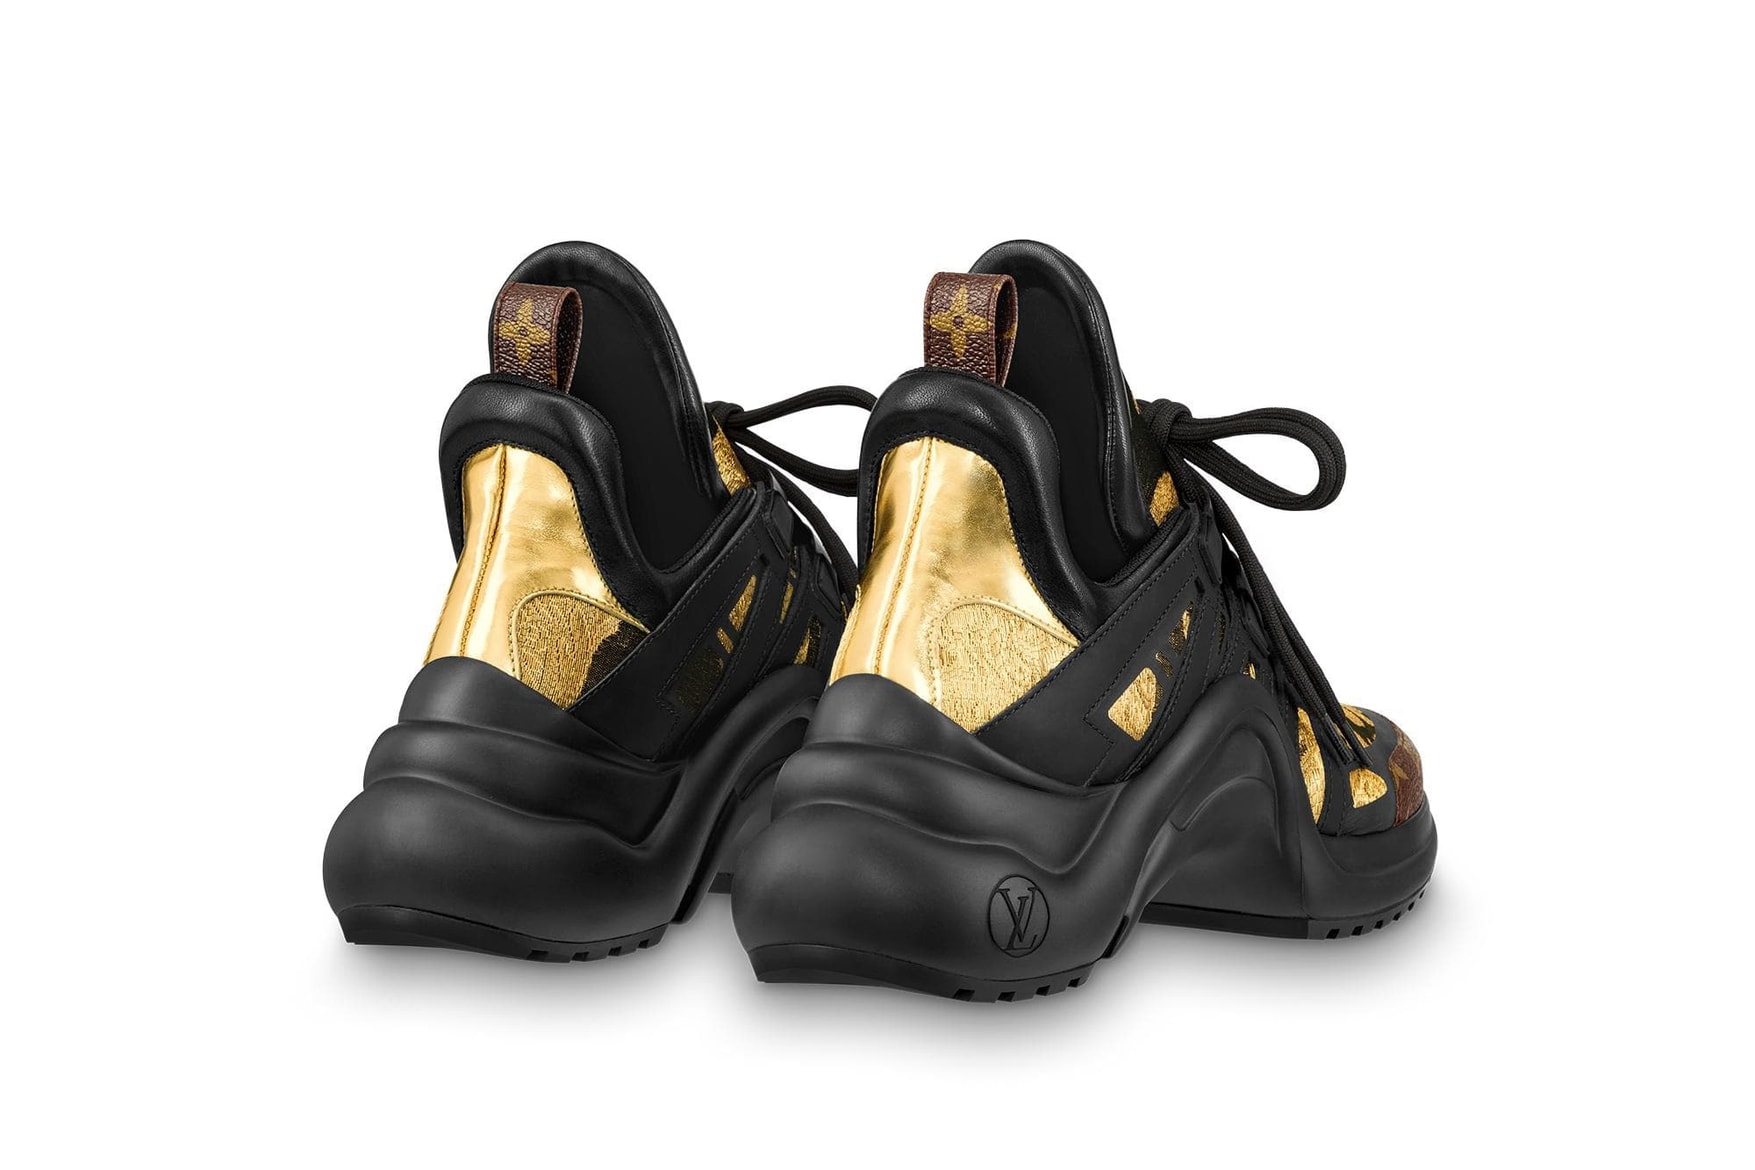 Designer CHX: The Louis Vuitton Archlight Sneaker – chx with sole, inc